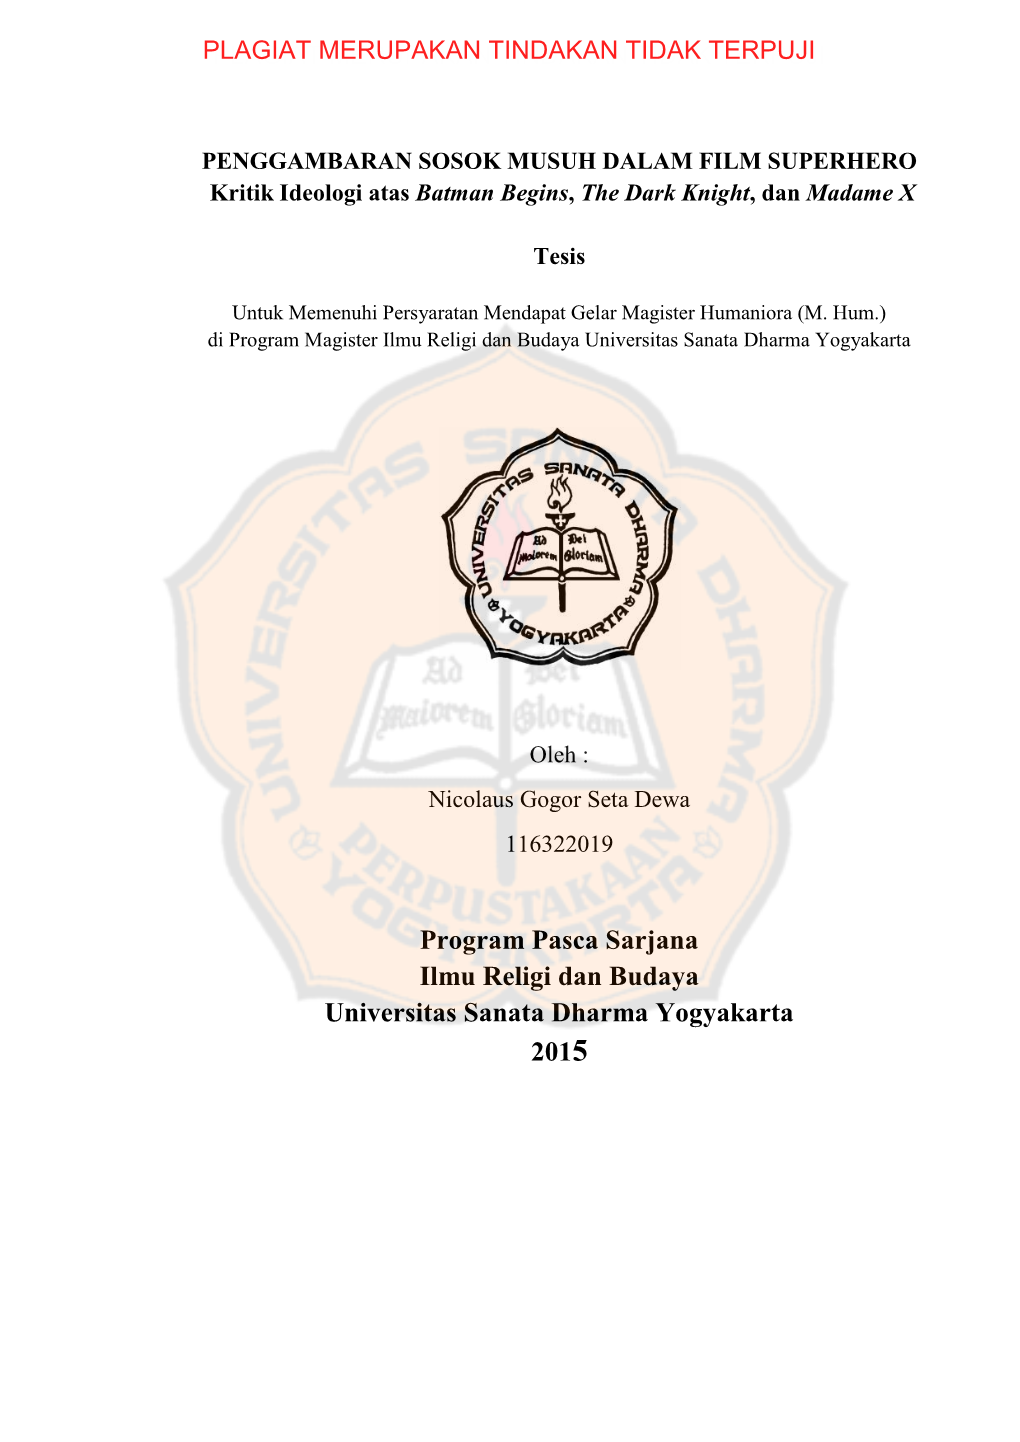 Program Pasca Sarjana Ilmu Religi Dan Budaya Universitas Sanata